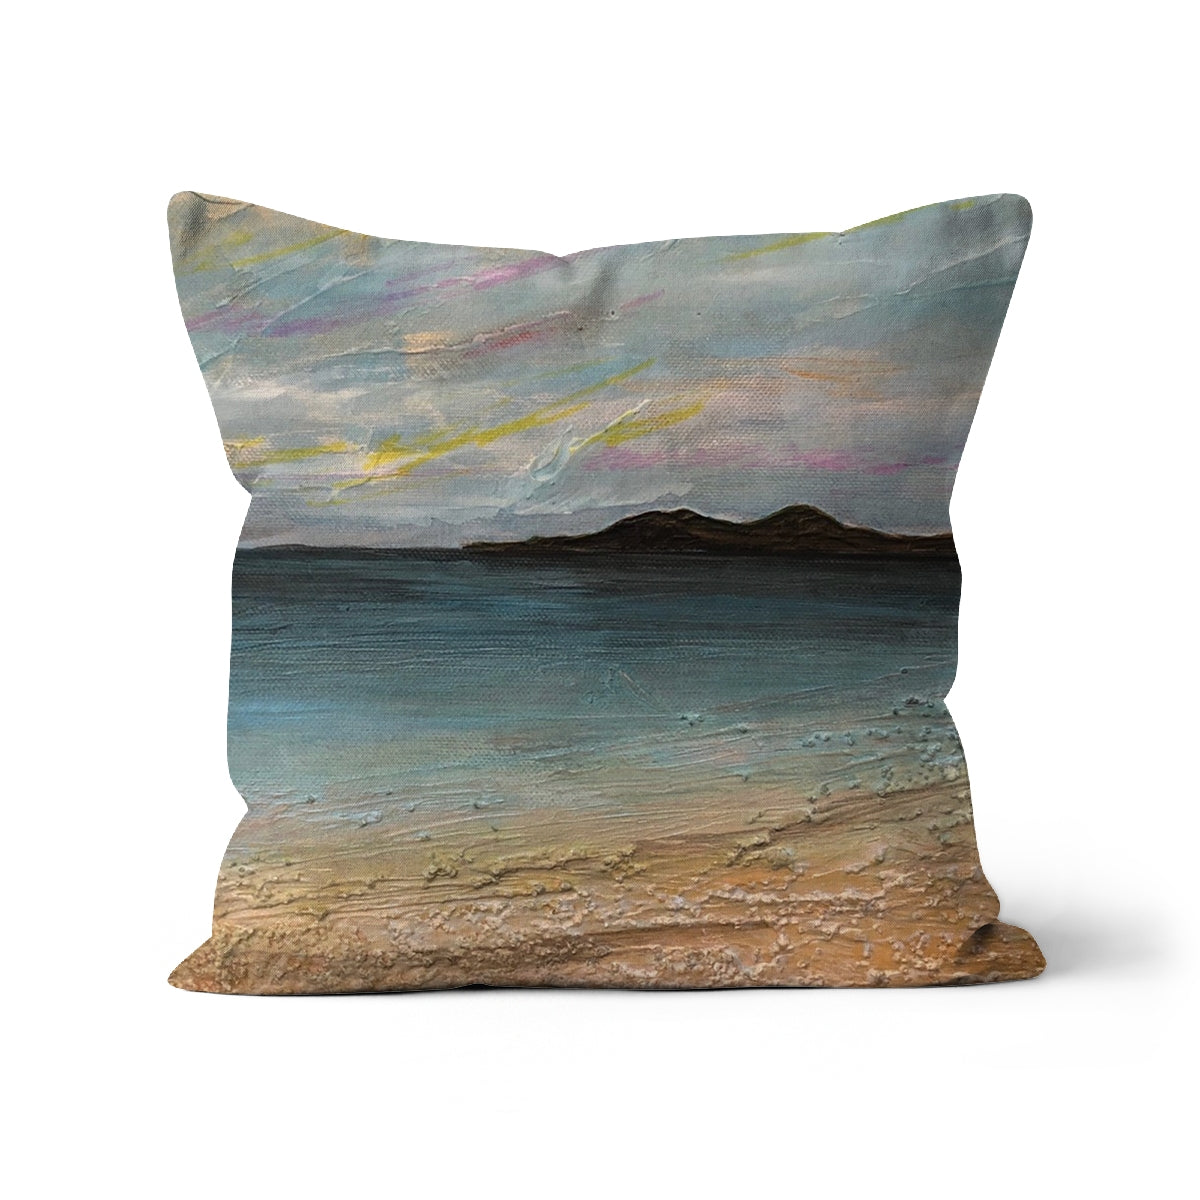 Garrynamonie Beach South Uist Art Gifts Cushion-Cushions-Hebridean Islands Art Gallery-Canvas-24"x24"-Paintings, Prints, Homeware, Art Gifts From Scotland By Scottish Artist Kevin Hunter